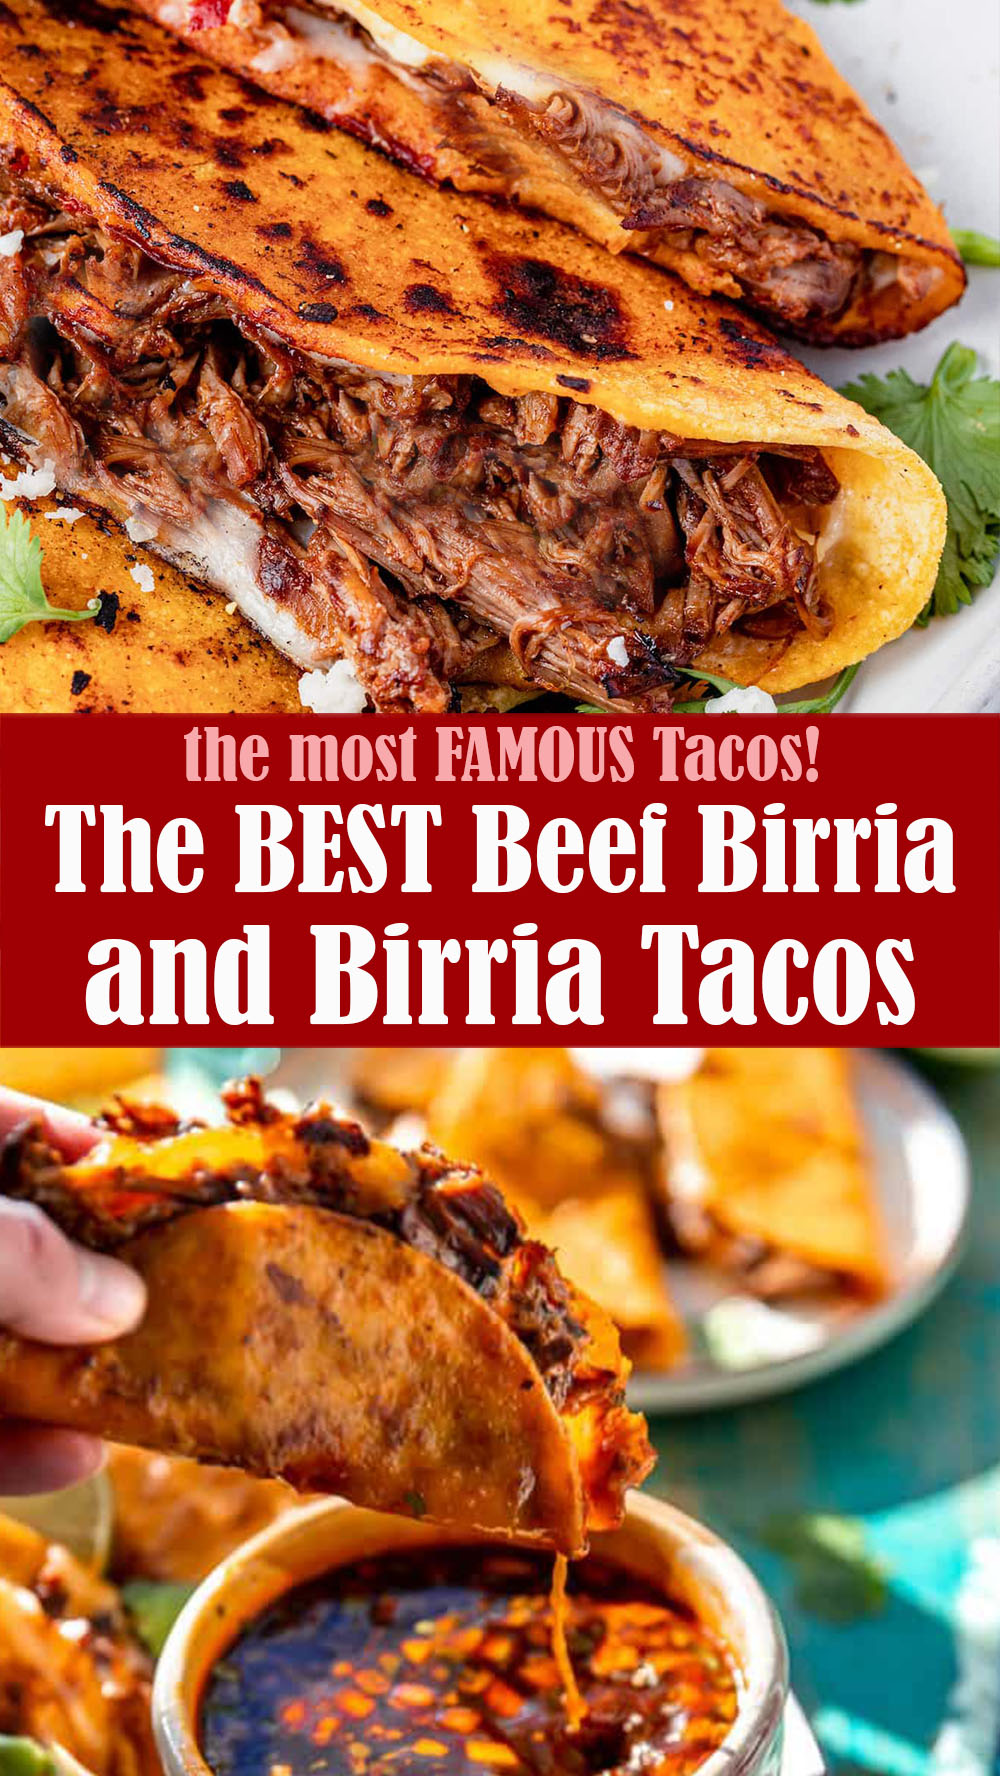 The BEST Beef Birria and Birria Tacos